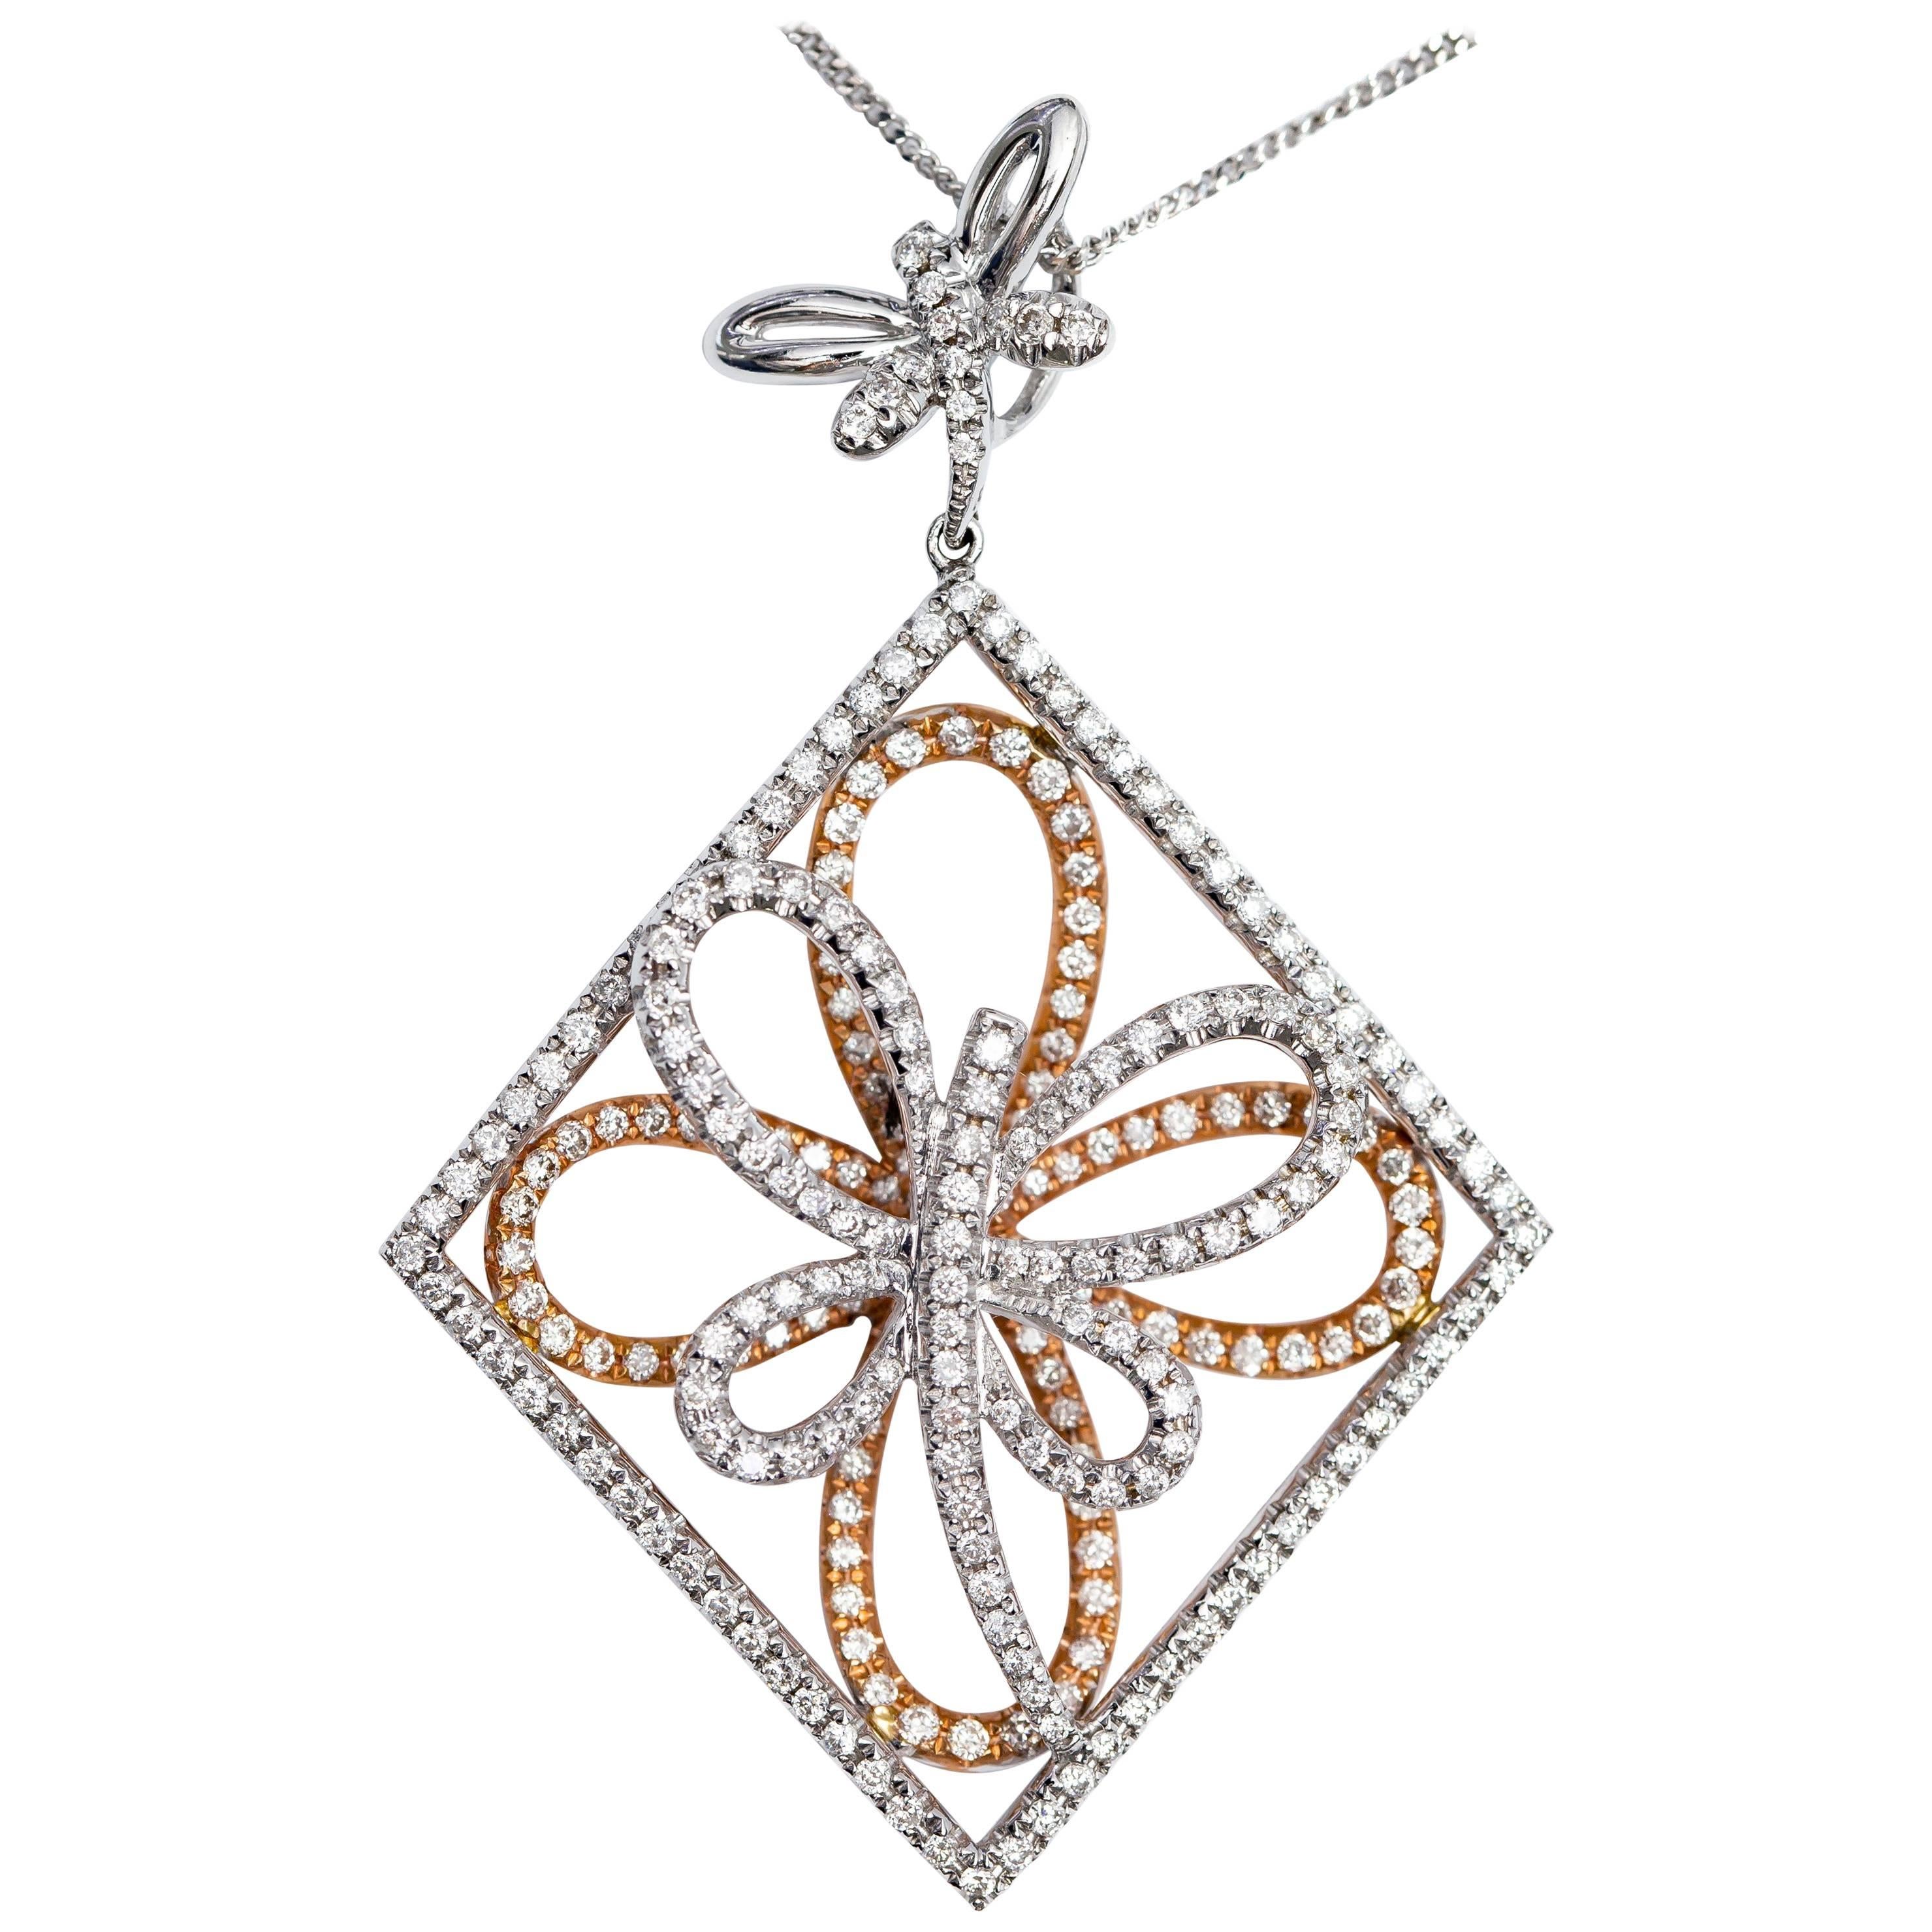 Chaîne collier pendentif en forme de papillon fantaisie en or blanc rose 18 carats de 1,31 carat